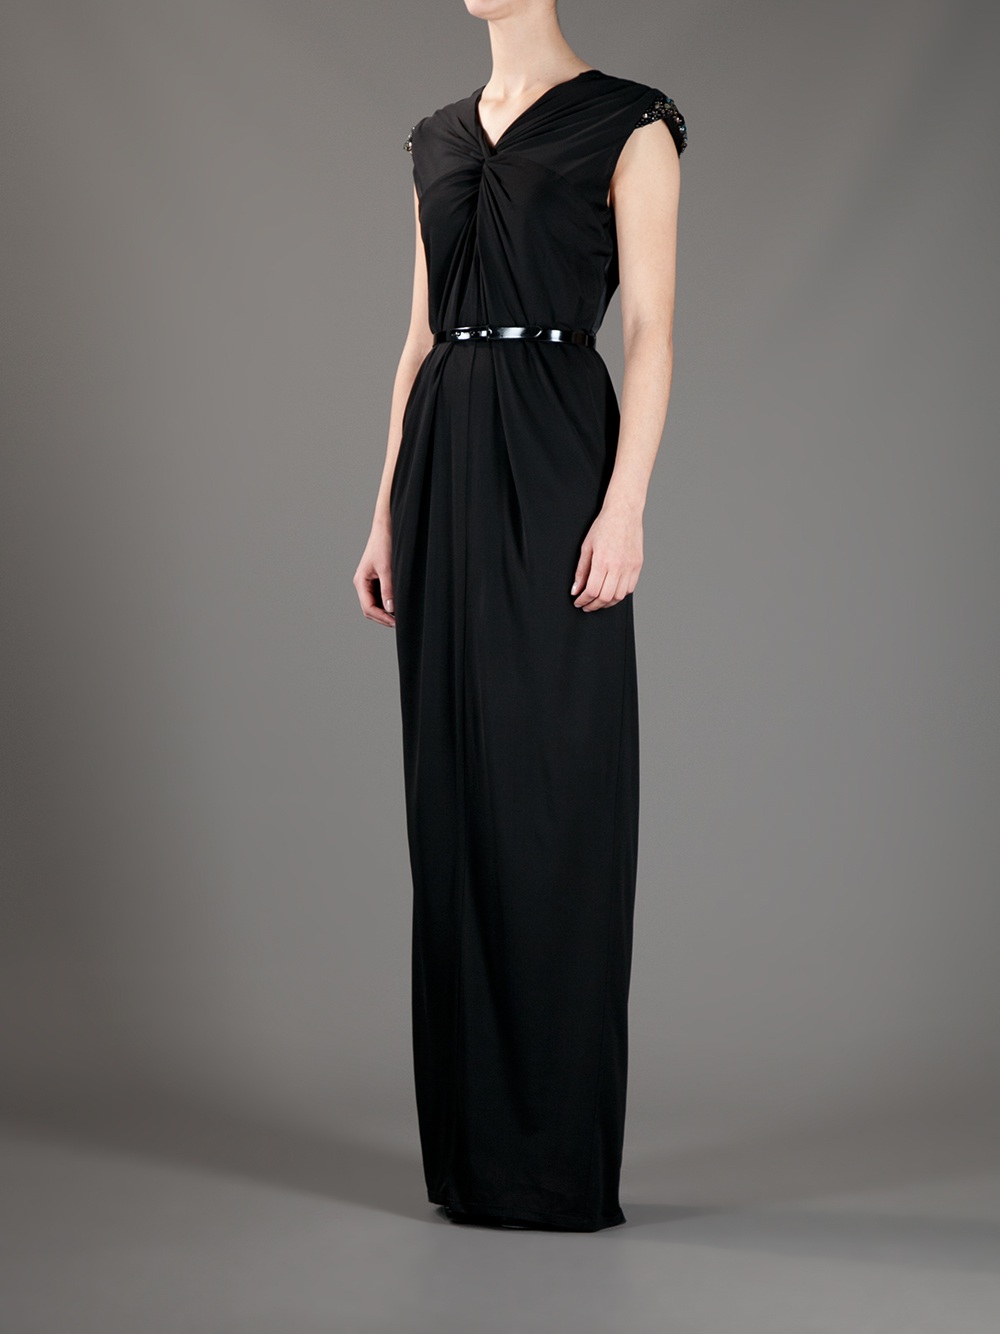 Bastyan Bree Belted Maxi Dress in Black | Lyst